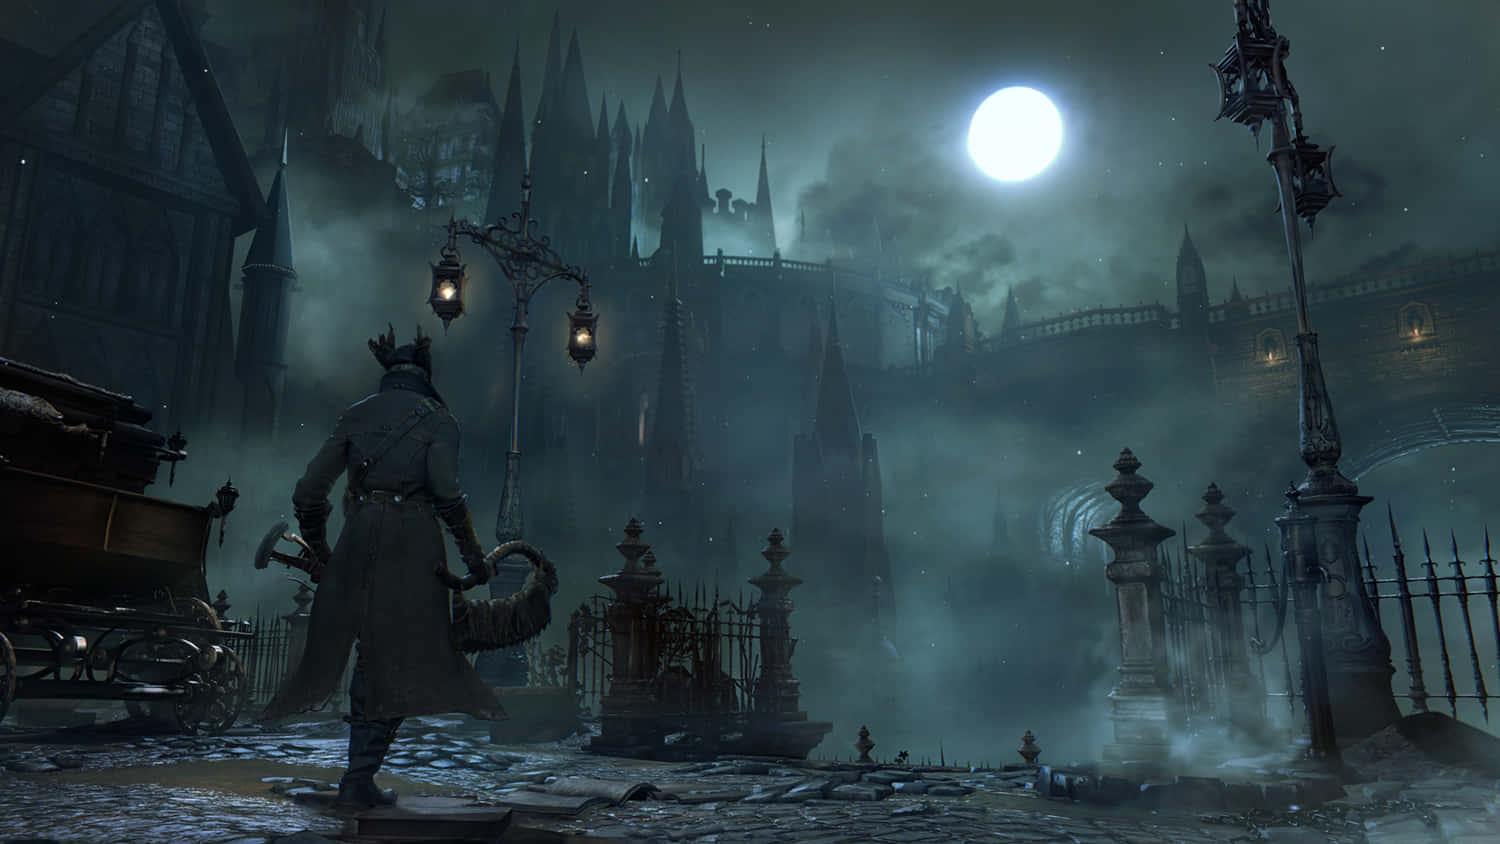 Gothic City Of Yharnam.Bloodborne 4K HD Wallpaper